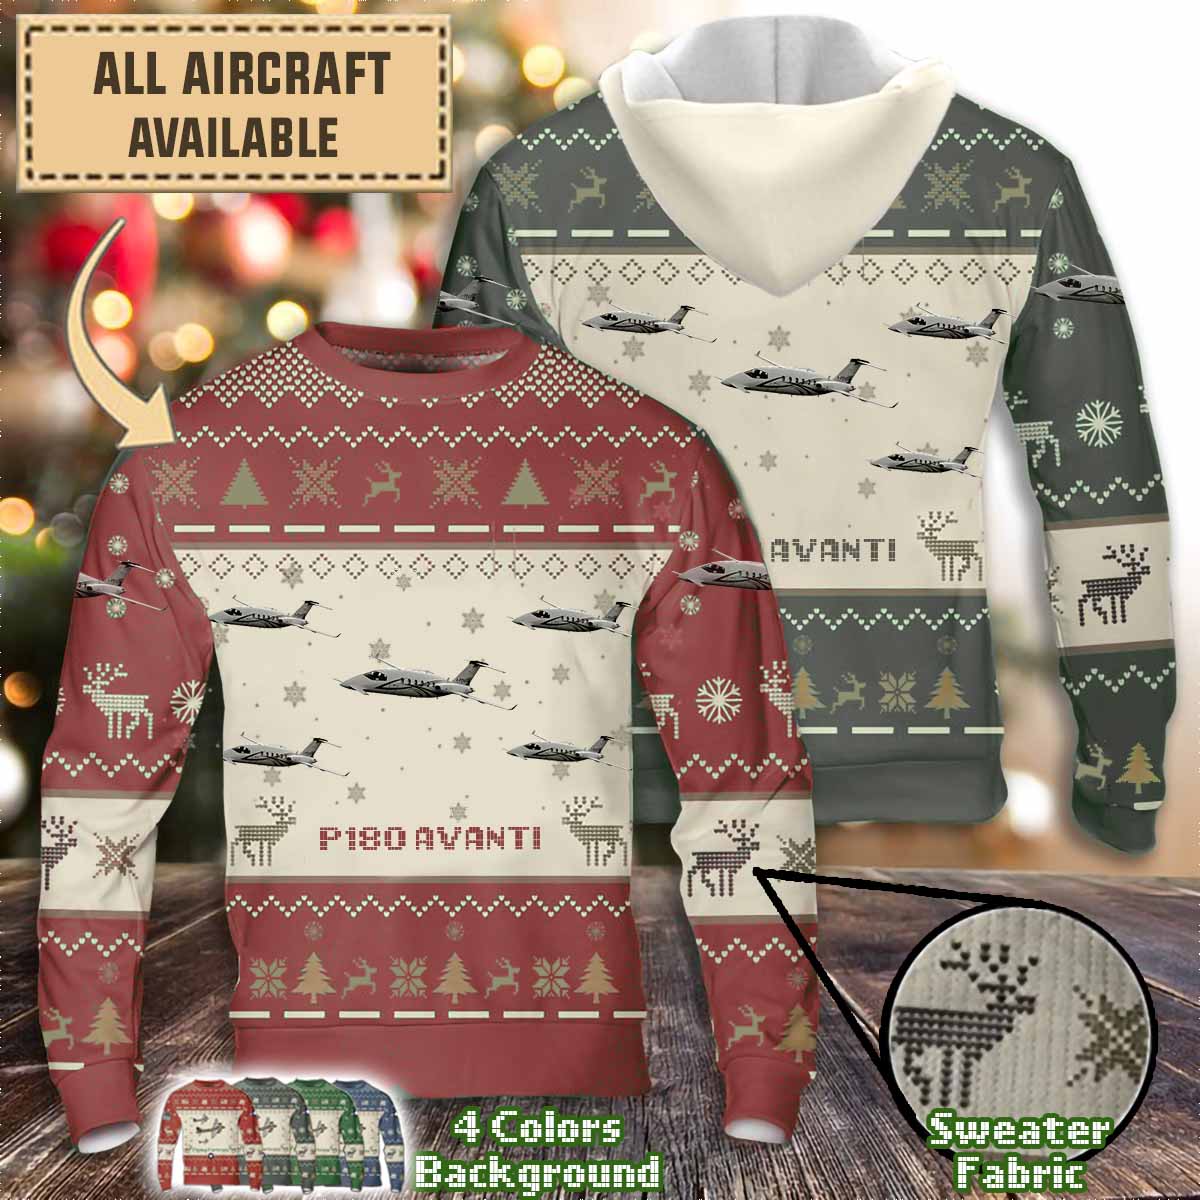 piaggio p180 avantiaircraft sweater